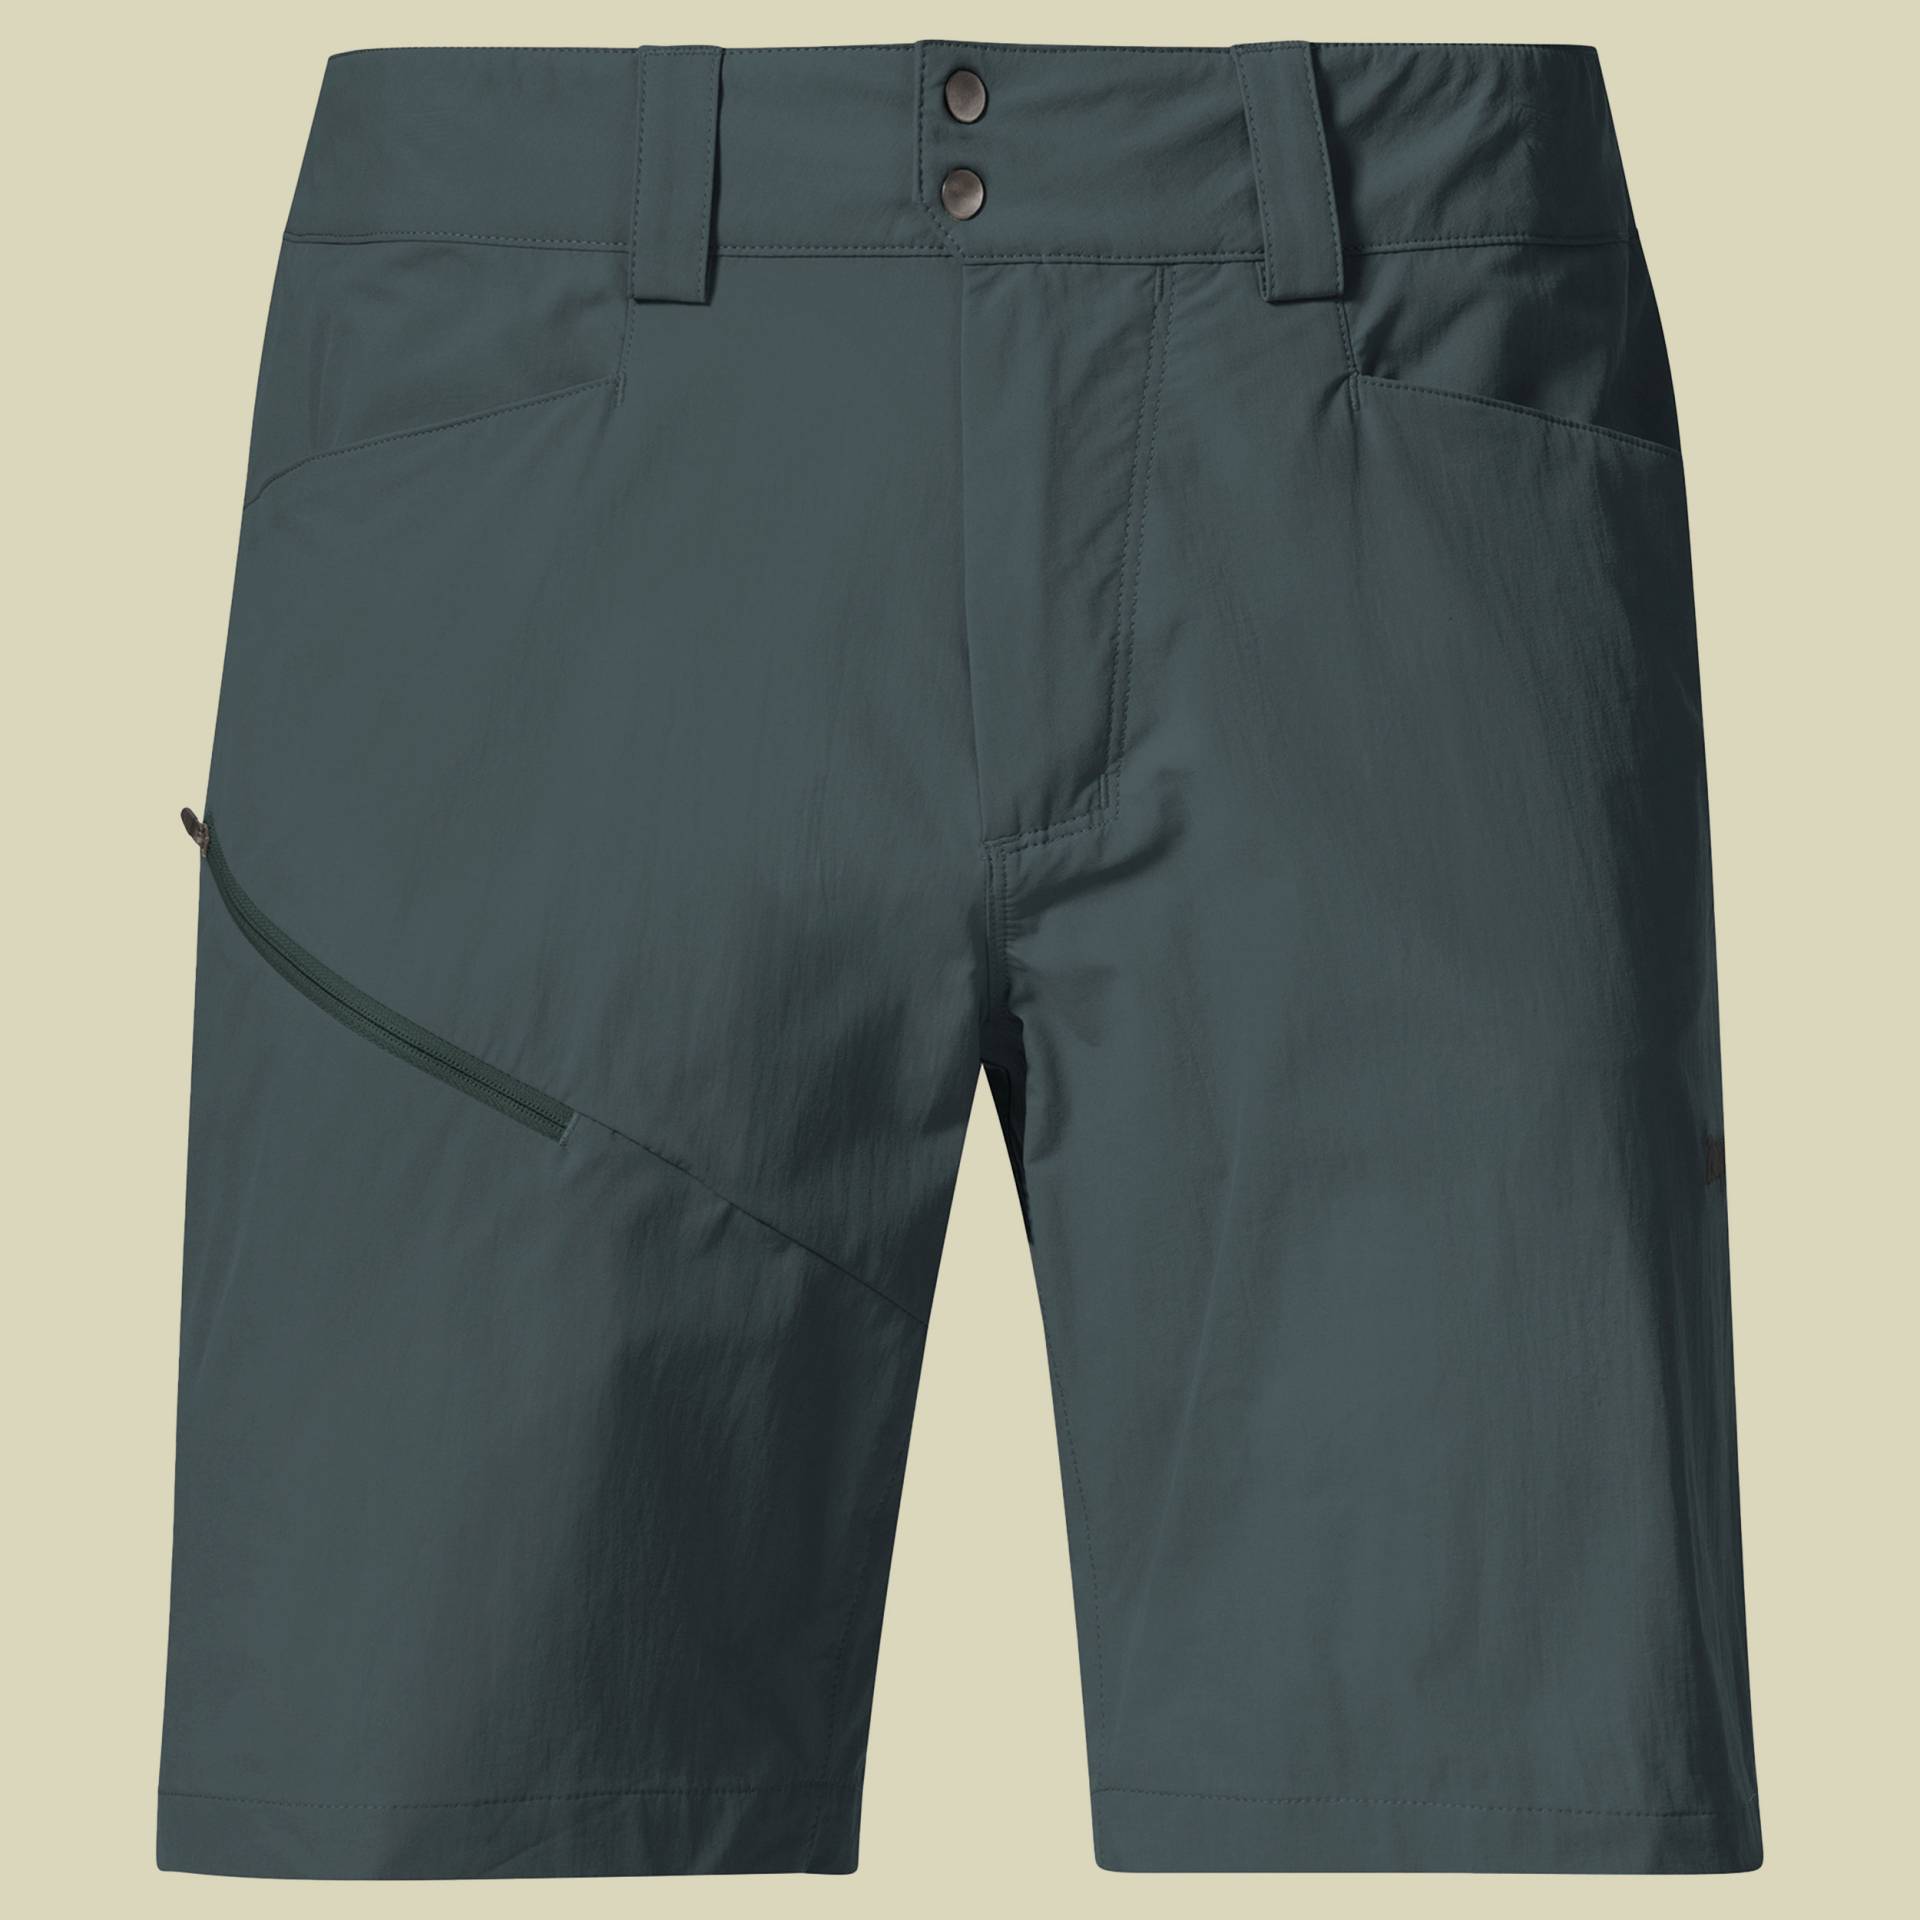 Rabot Light Softshell Shorts Men Größe 52 Farbe duke green von bergans